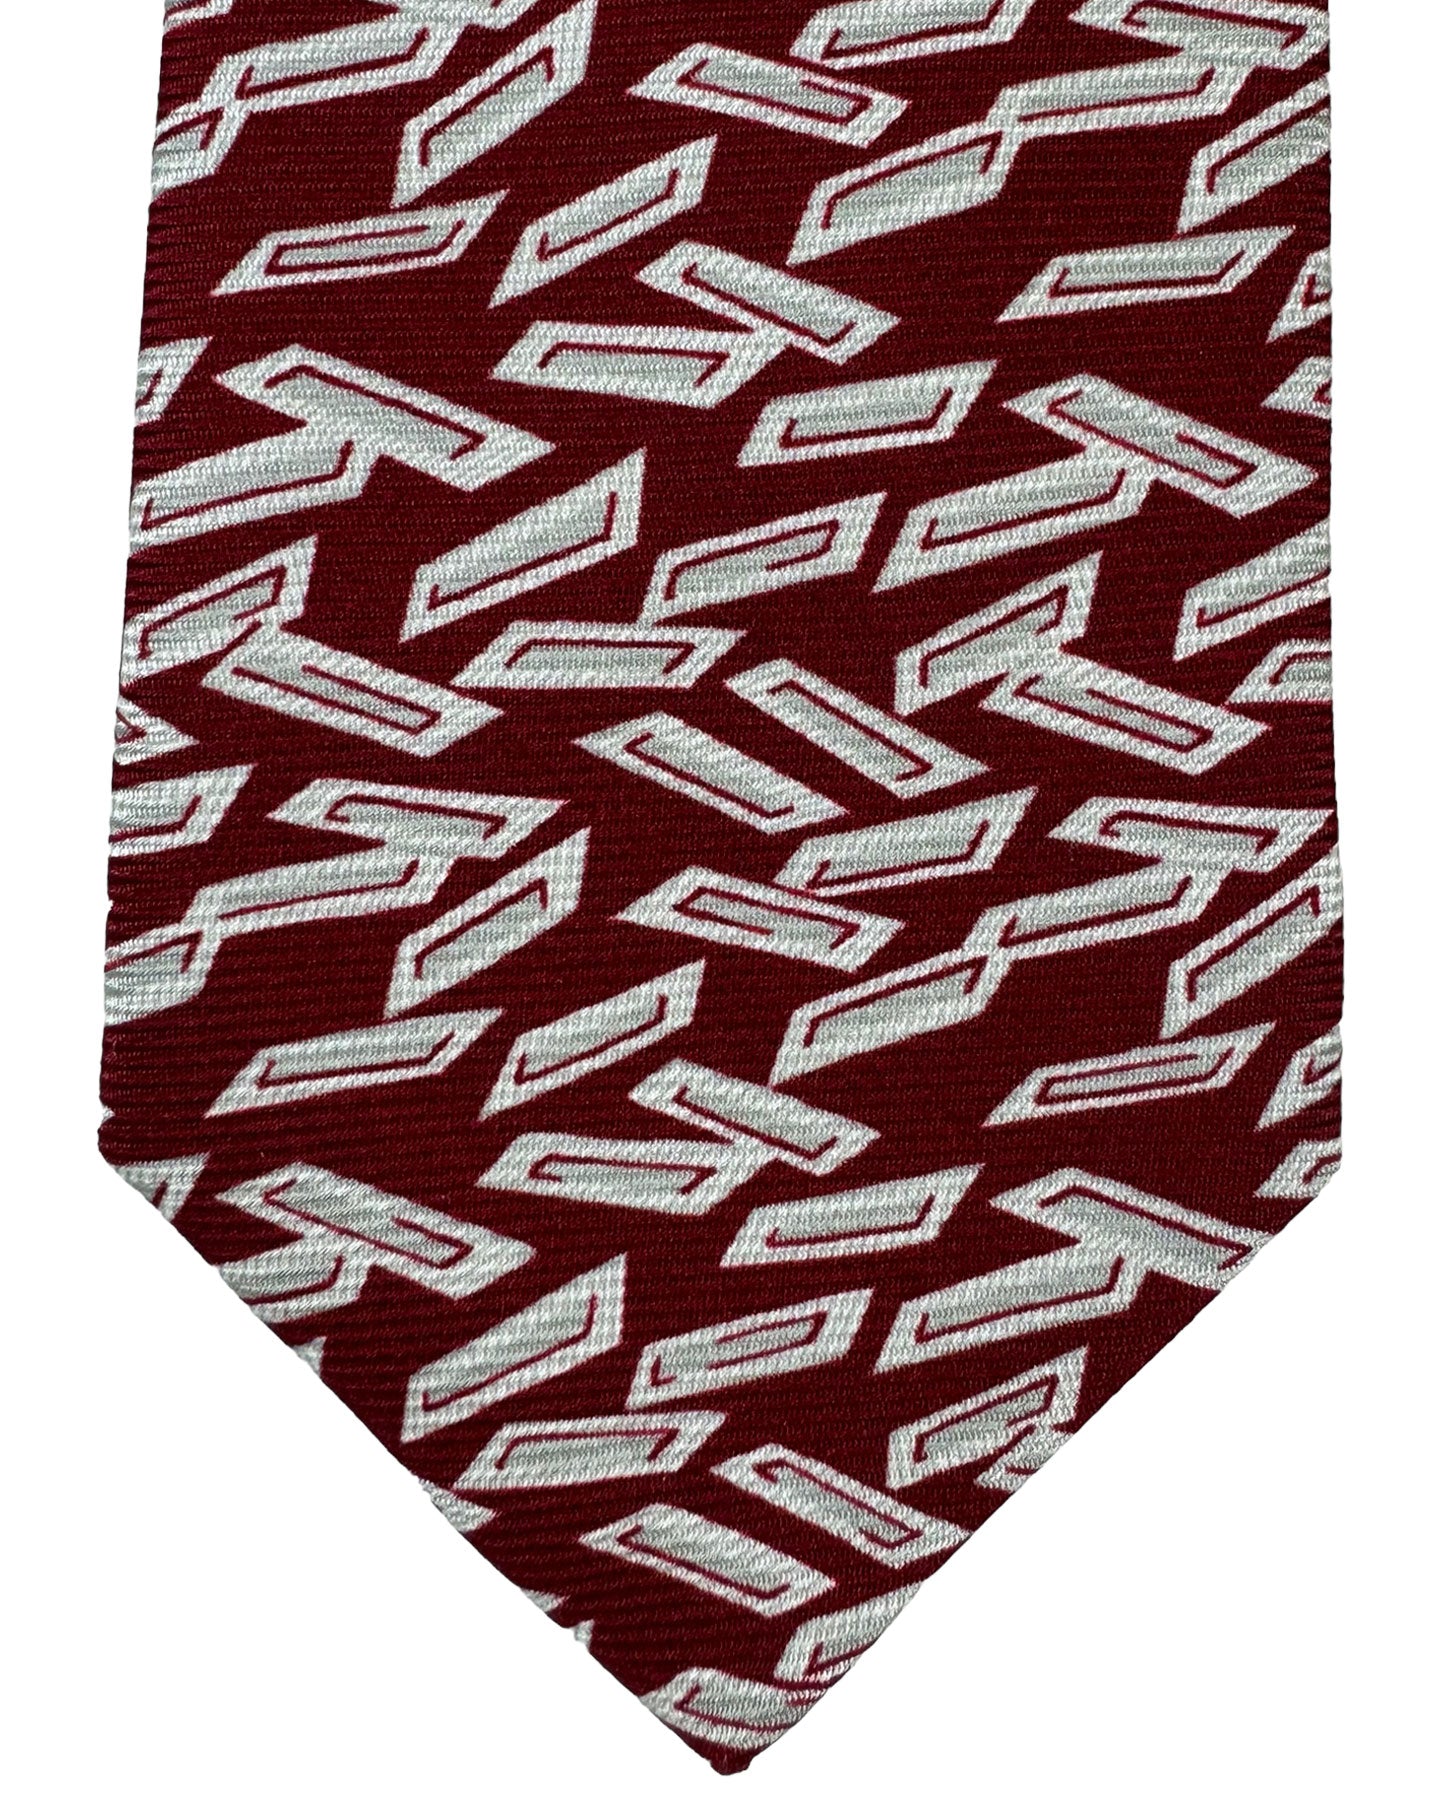 Kiton Silk Tie Maroon Gray Geometric Design - Sevenfold Necktie